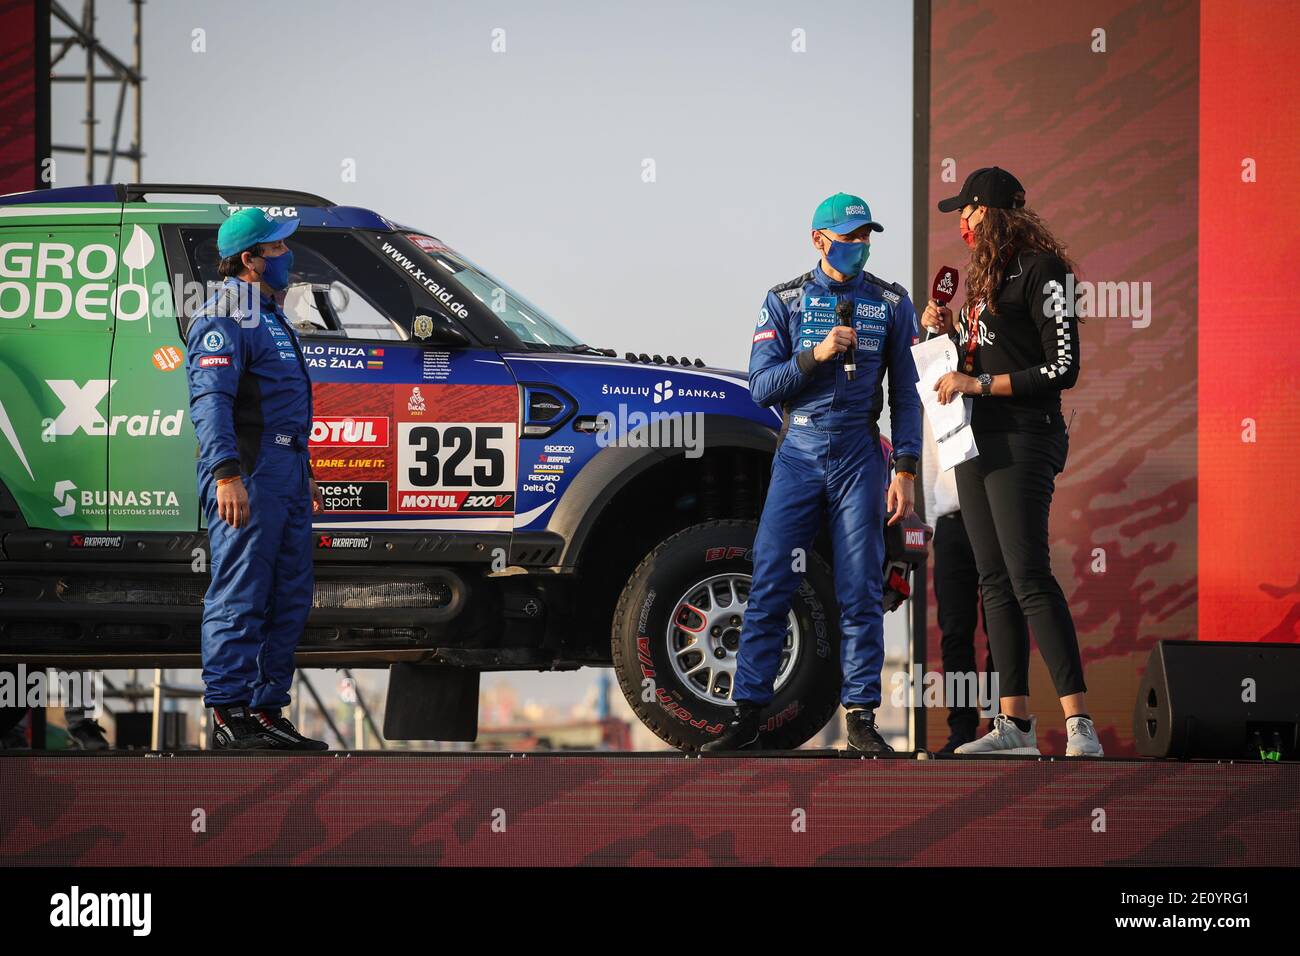 325 Zala Vaidotas (lt), Fiuza Paulo (prt), Mini, Agrorodeo, Auto, Aktion während der Dakar 2021as Prolog und Start podiu / LM Stockfoto